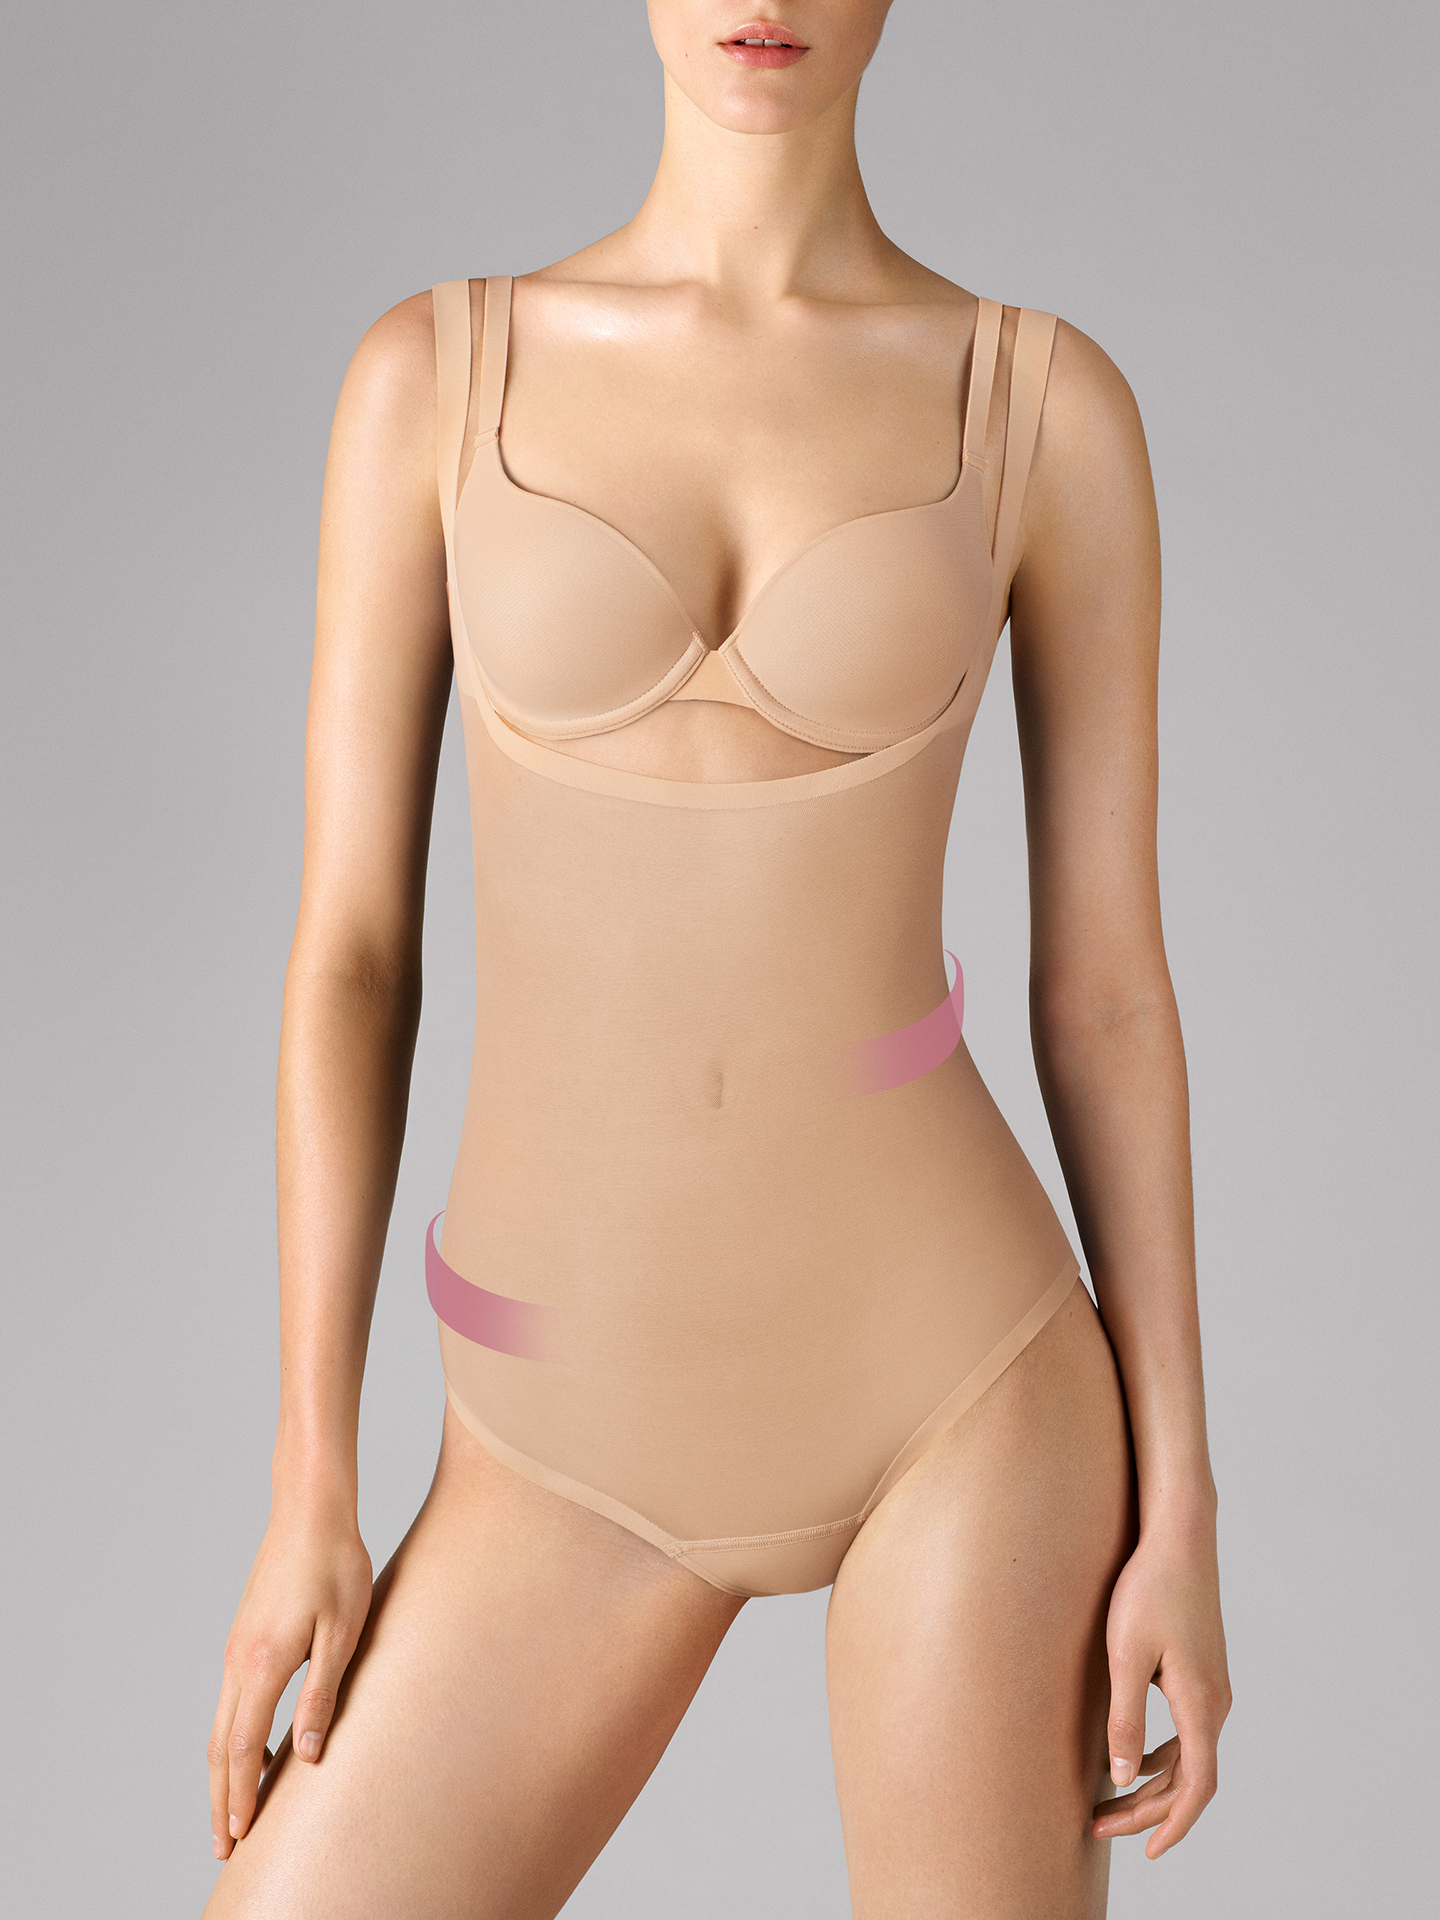 Wolford – Tulle Forming String Body, Frau, nude, Größe: 42